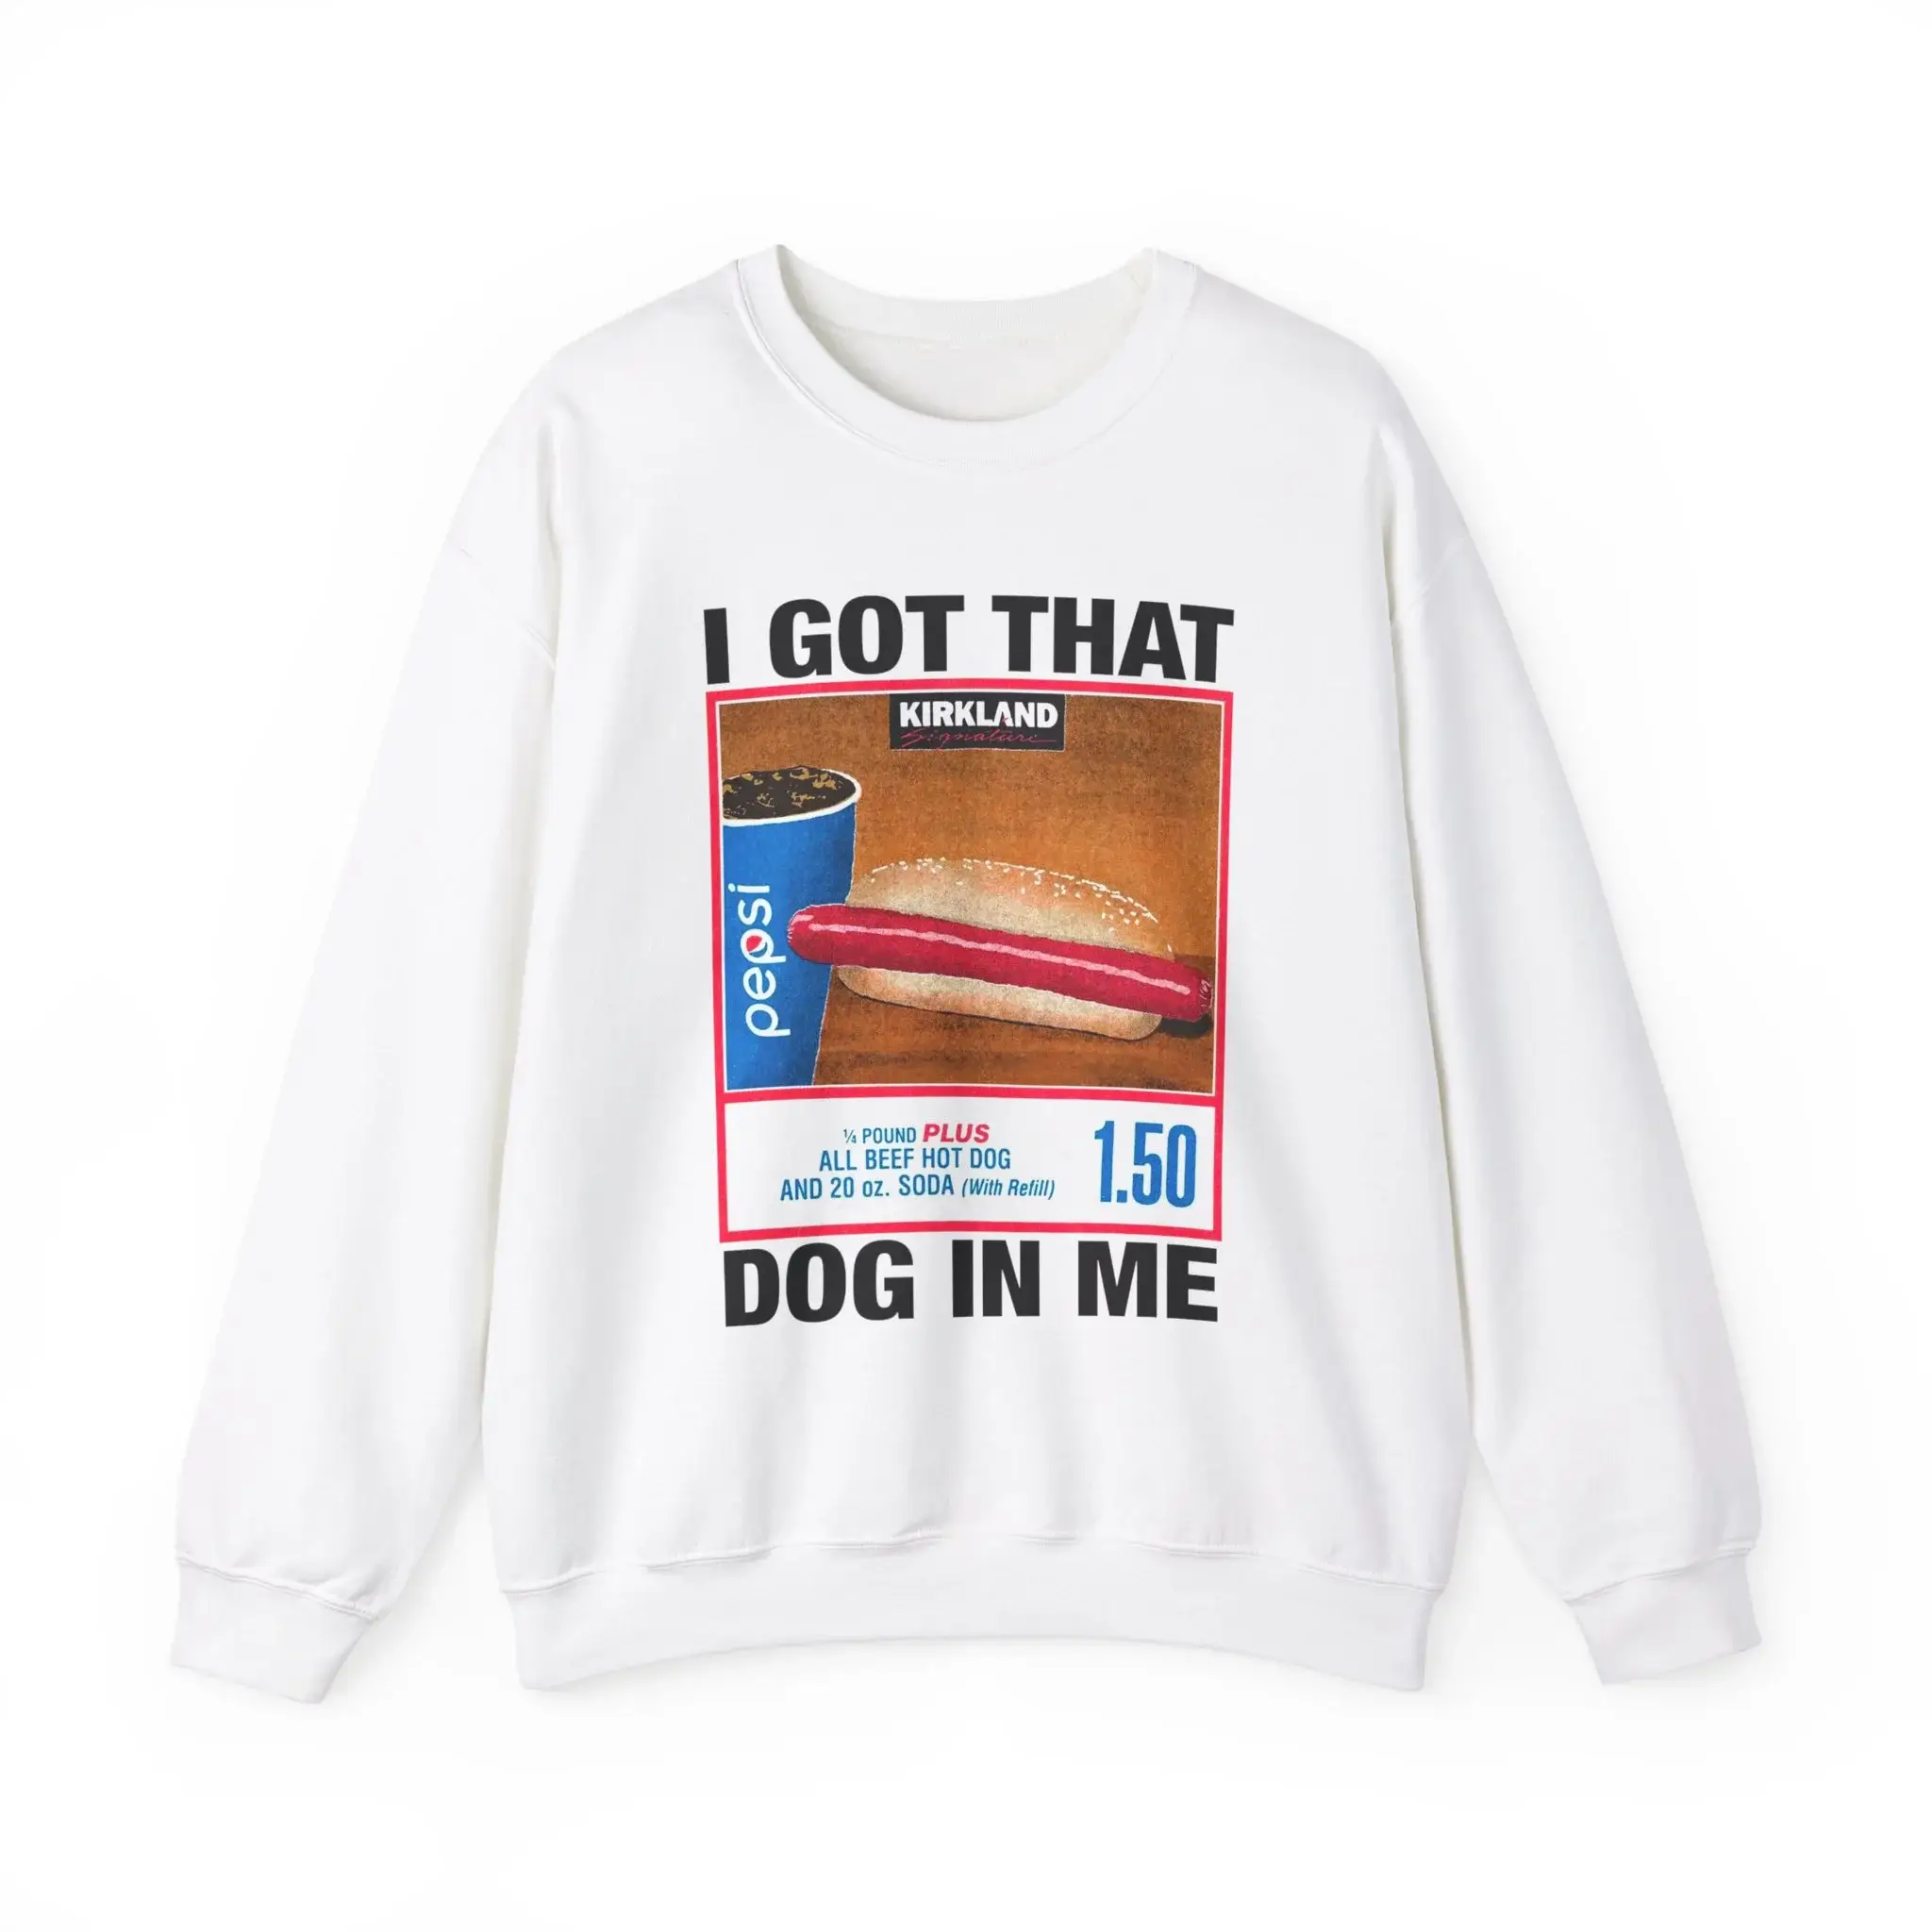 I Got That Dog In Me Costco Pajamas Set - Torunstyle